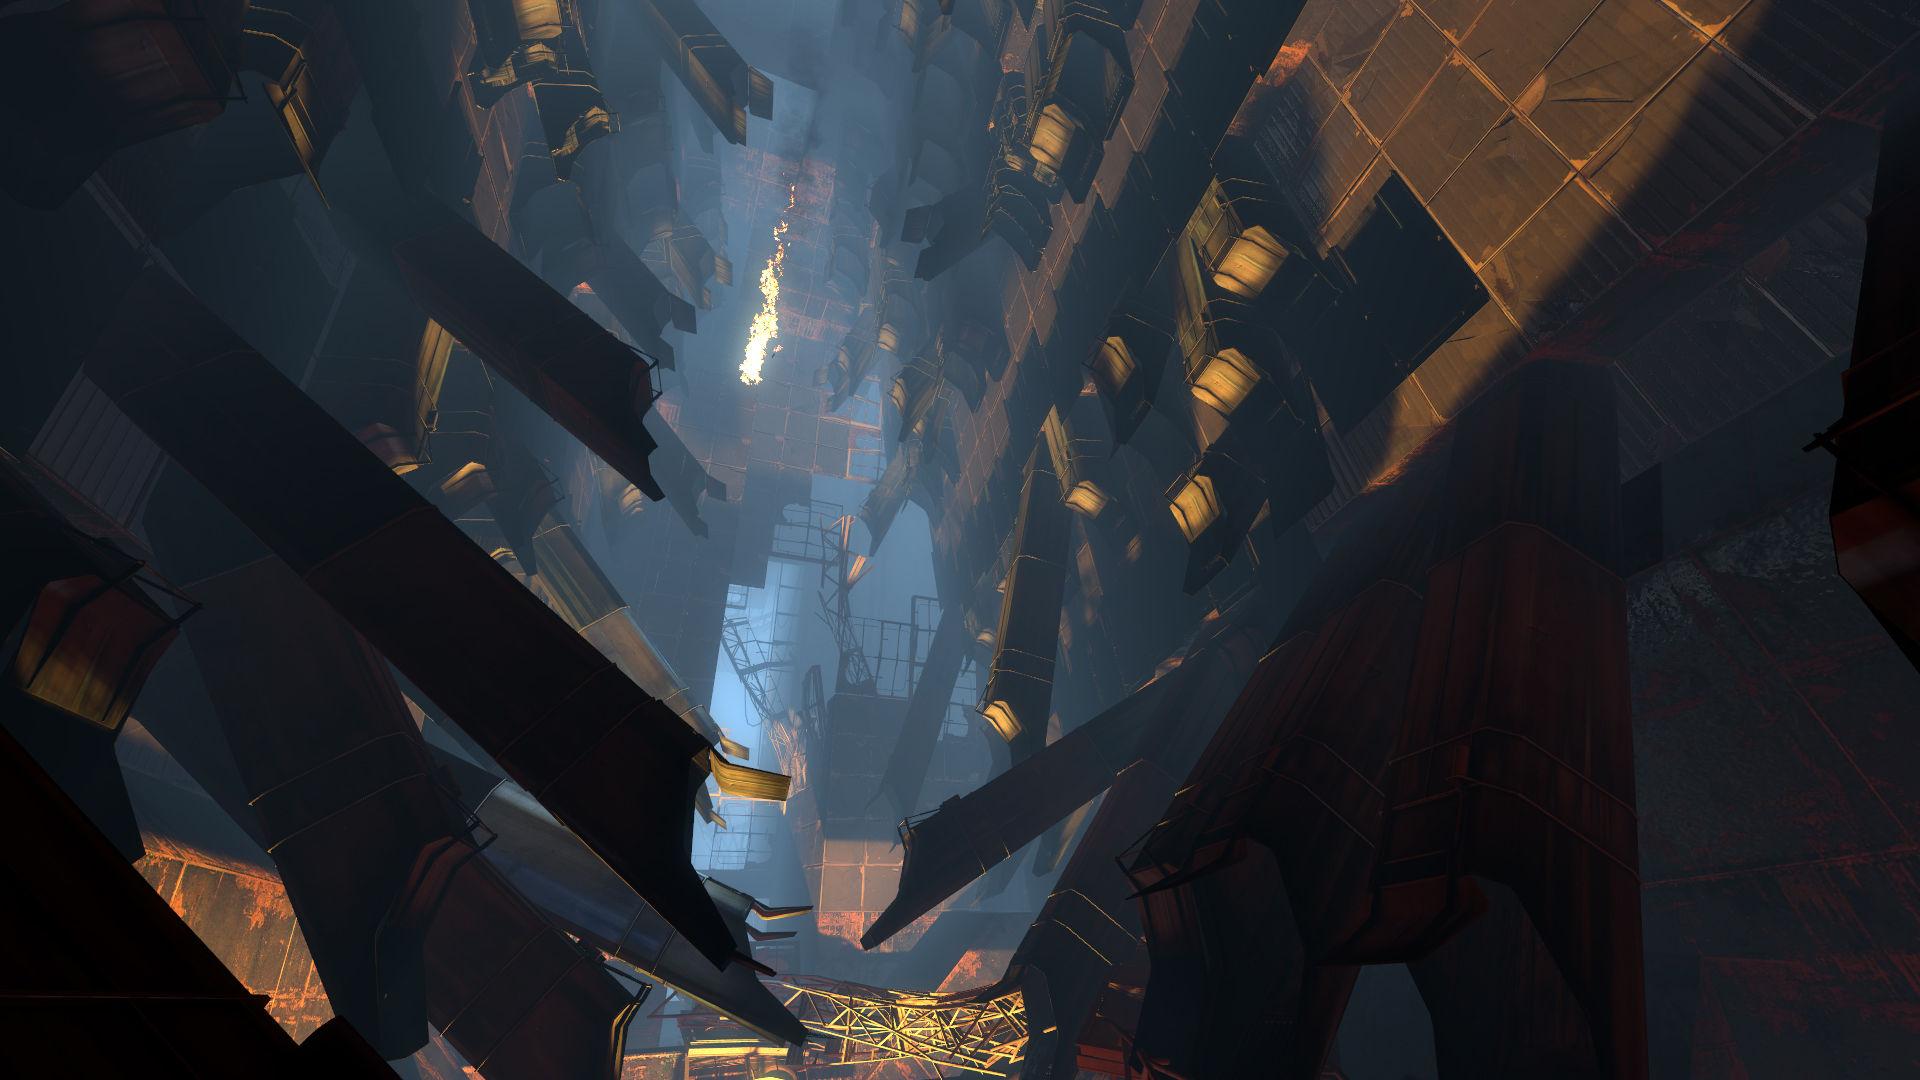 Screenshot №11 from game Portal 2